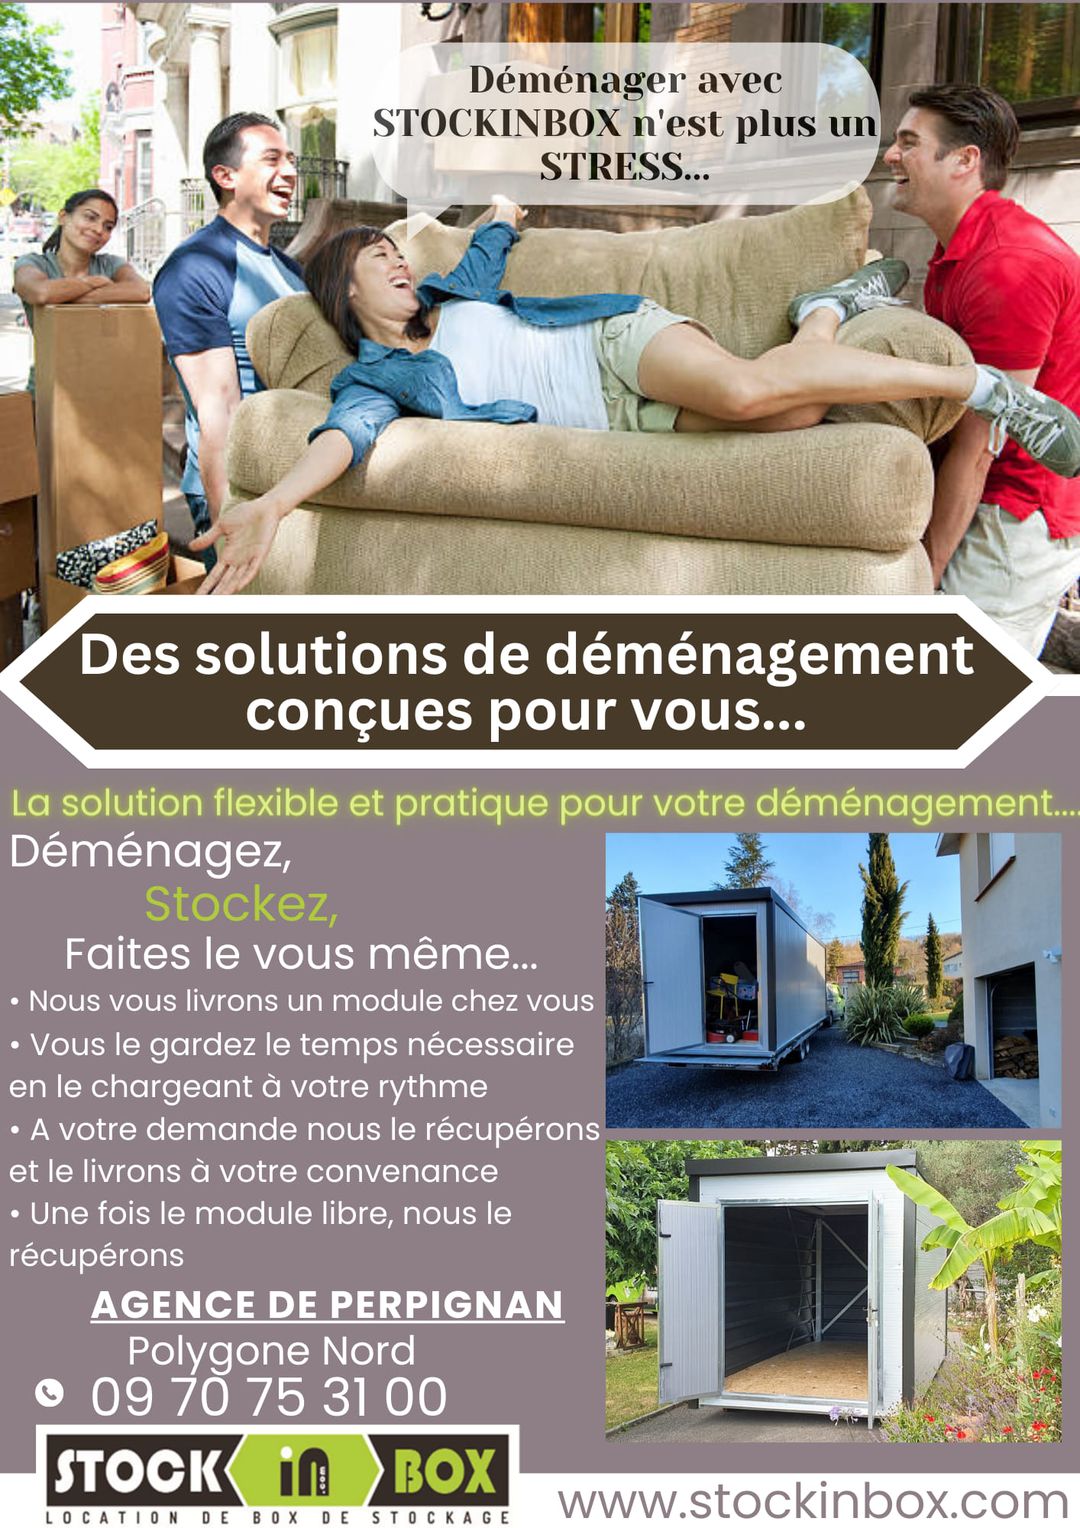 Déménagement Garde-meubles Perpignan Ariège Aude